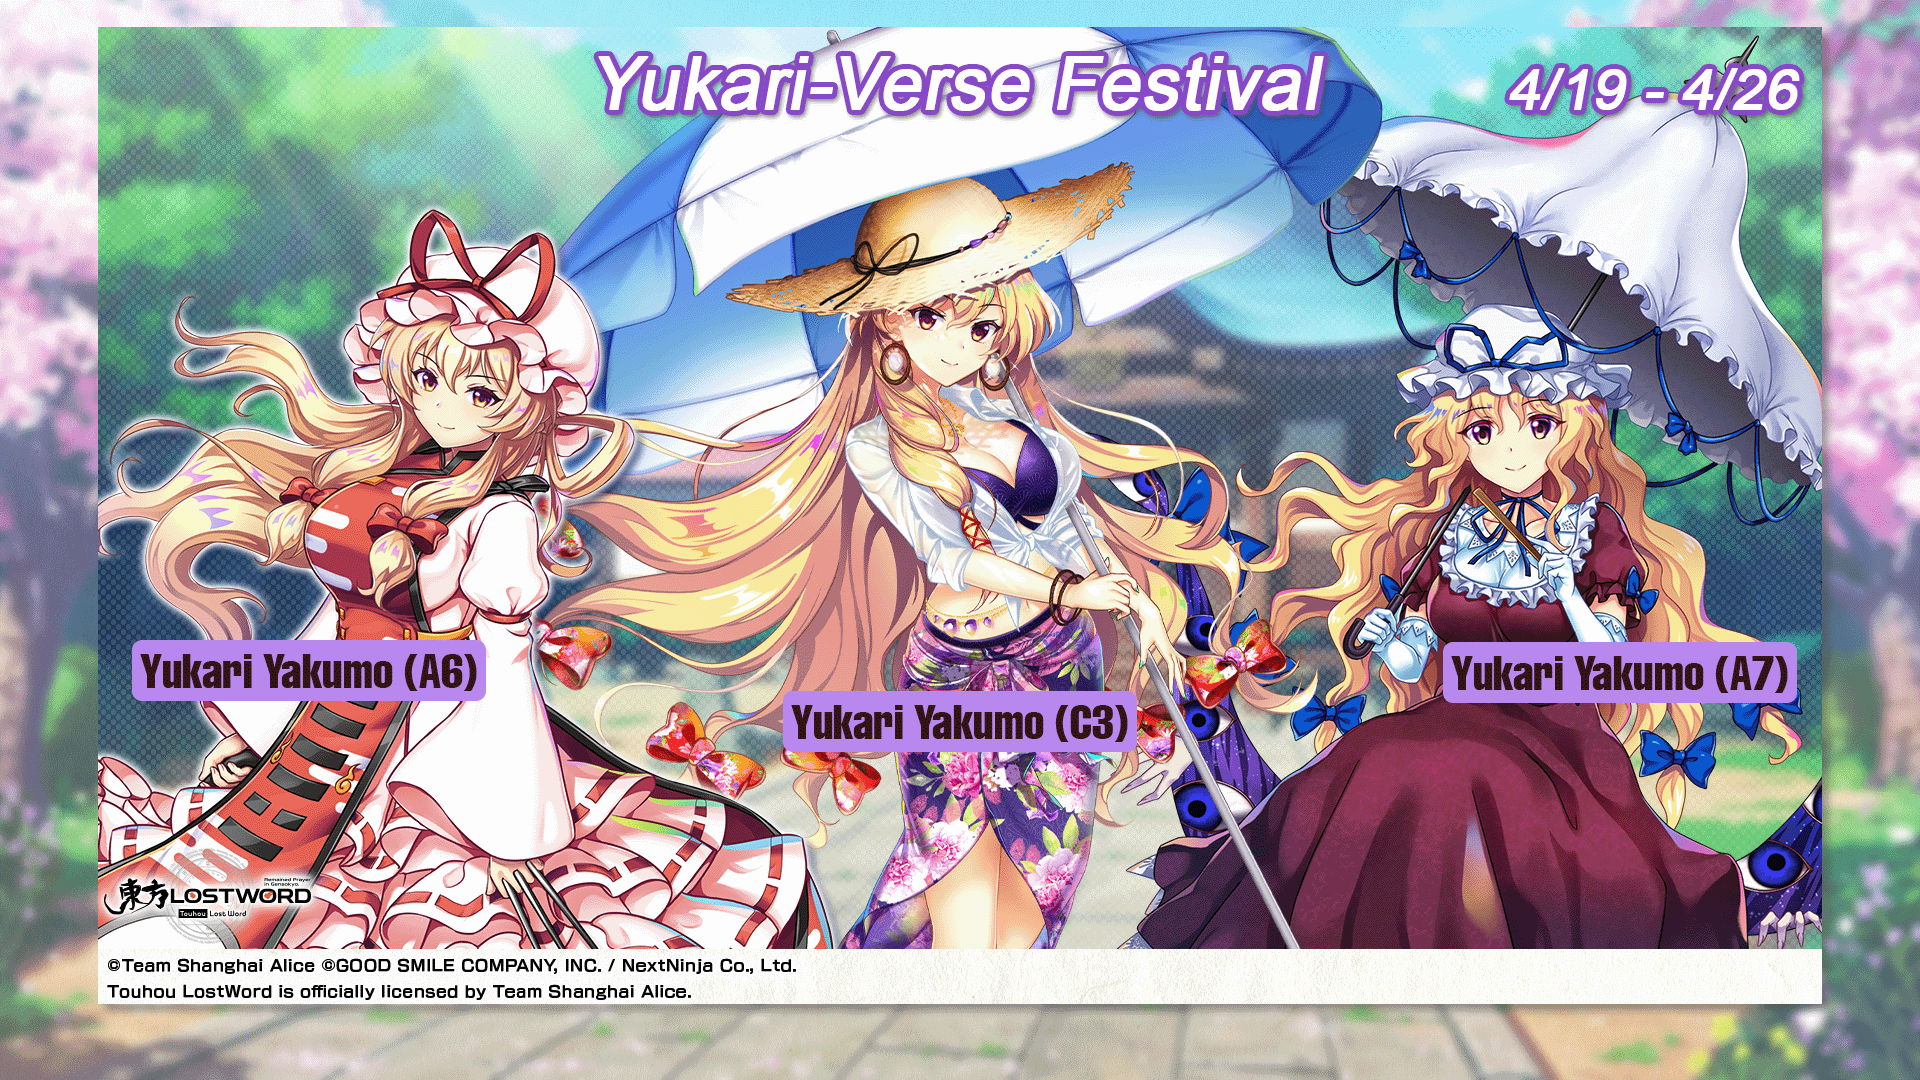 Yukari-Verse